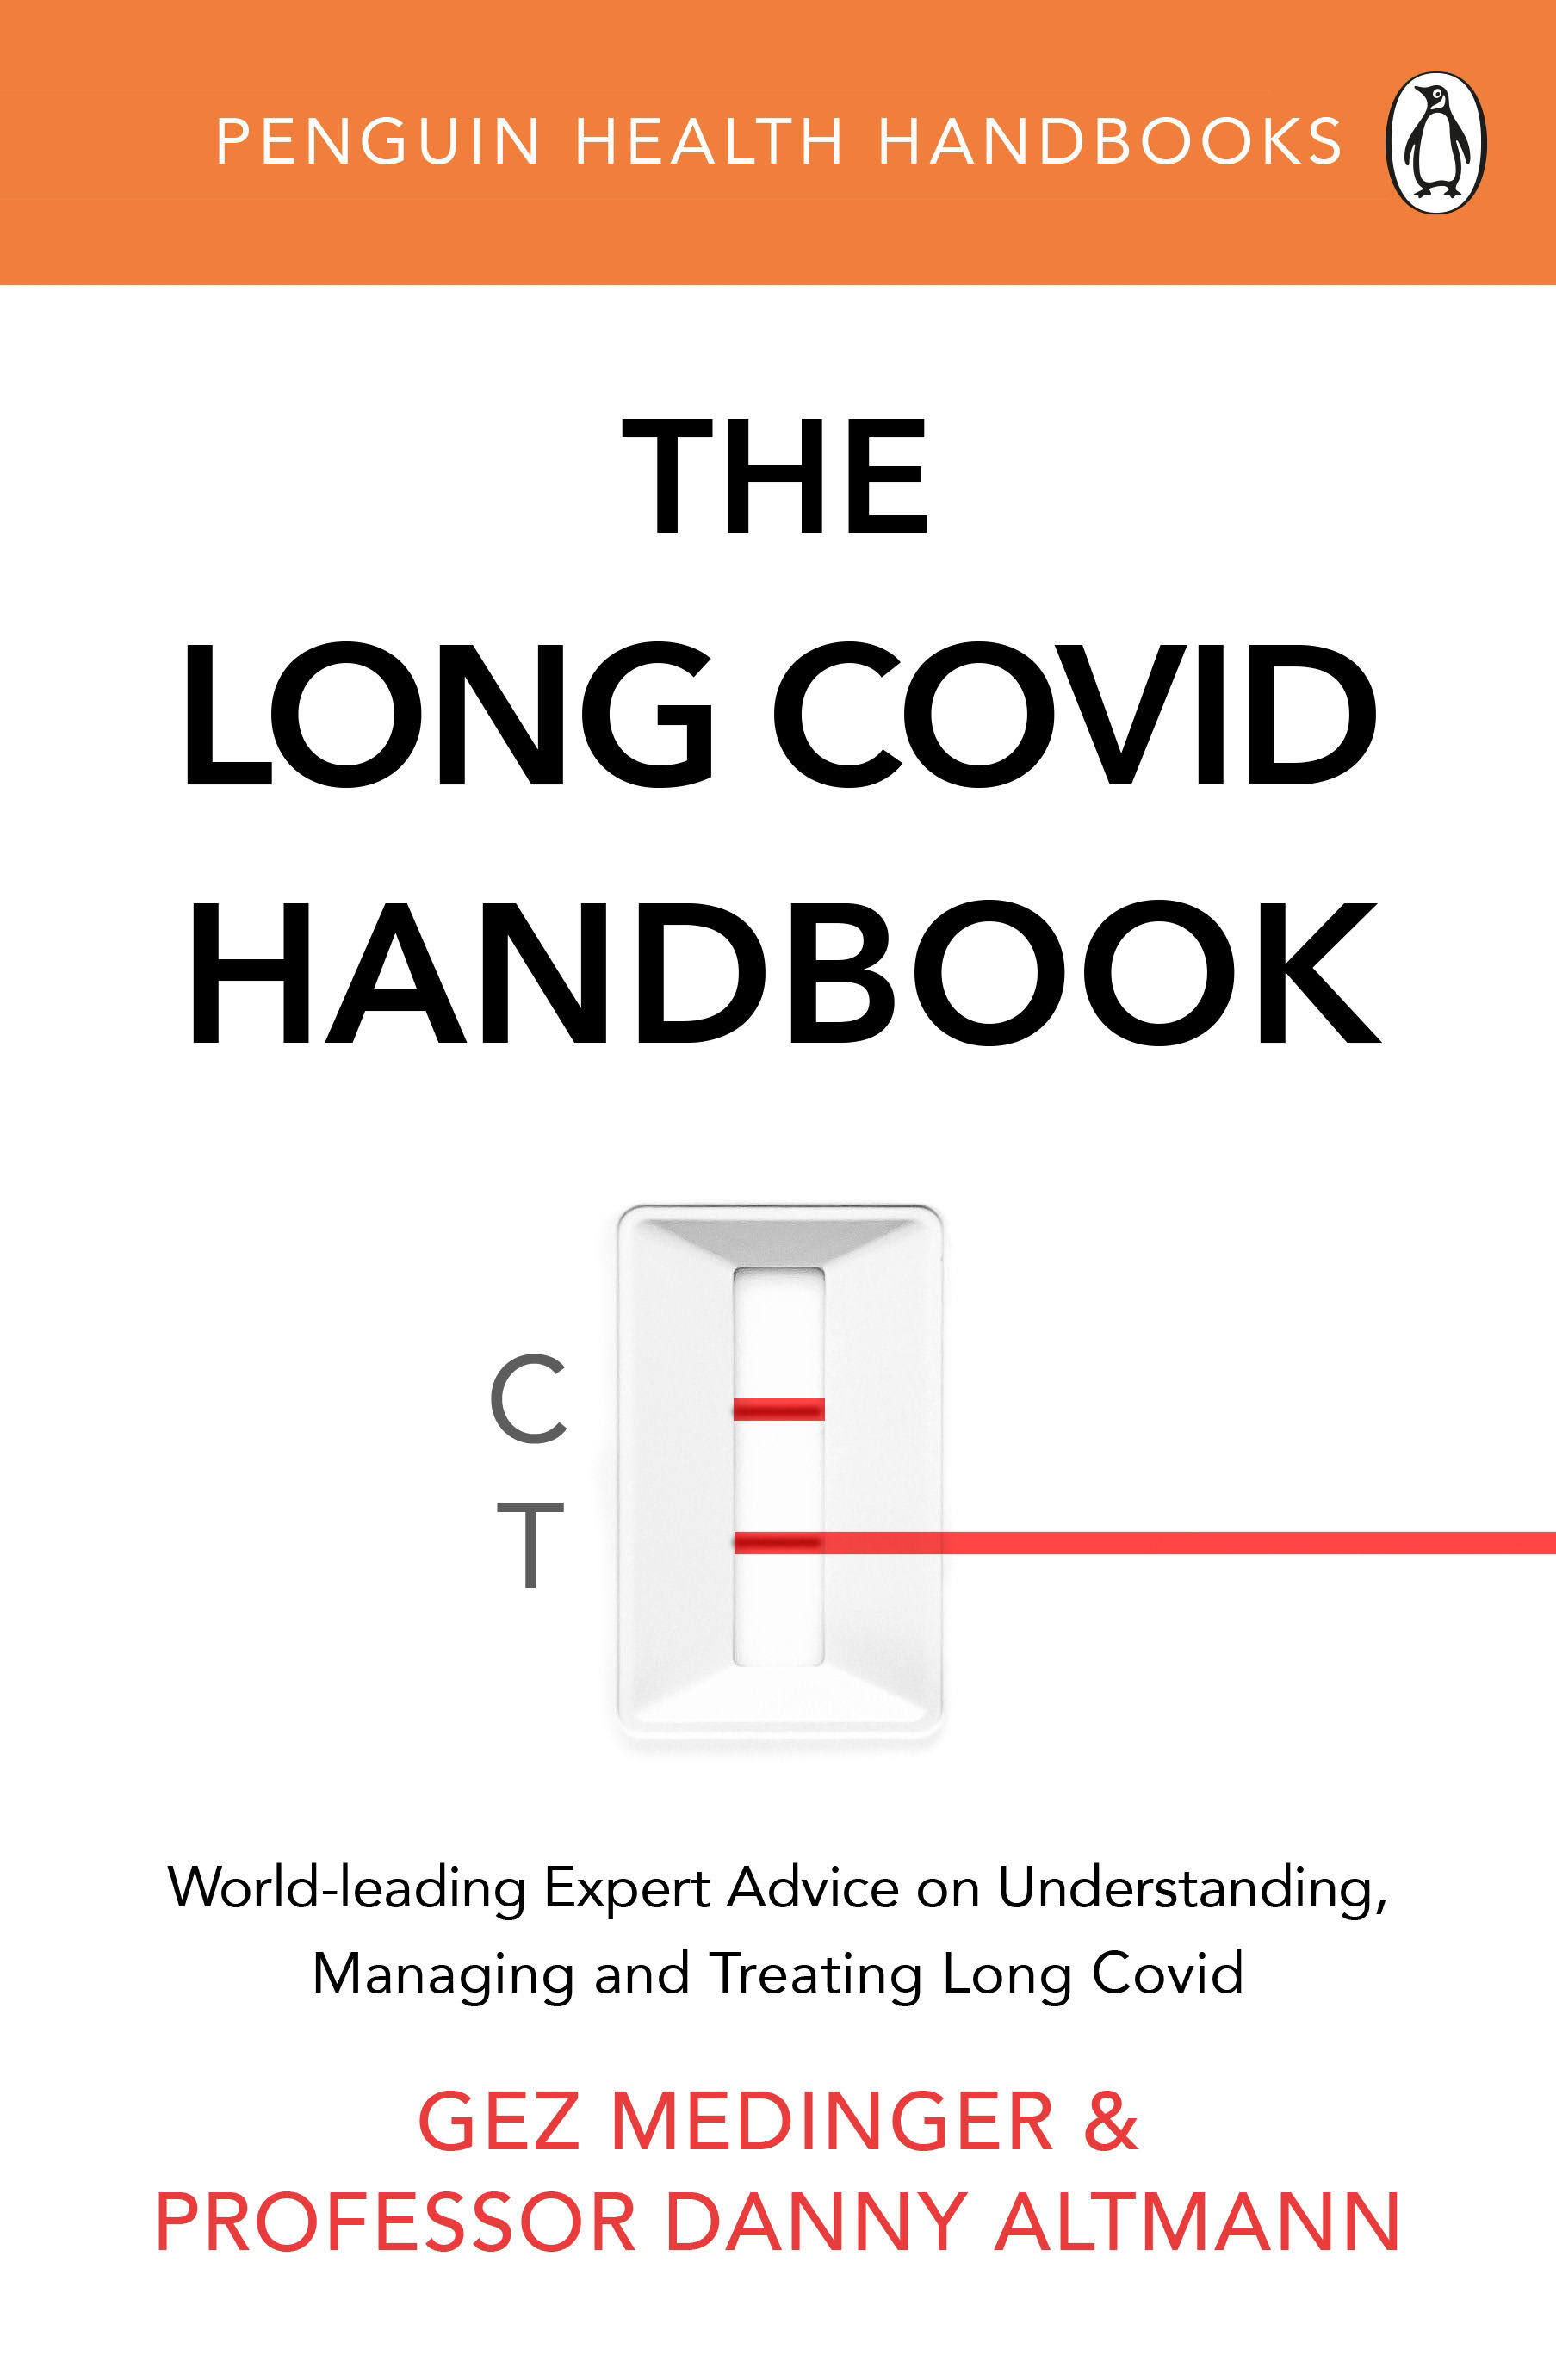 The Long Covid Handbook [Book]